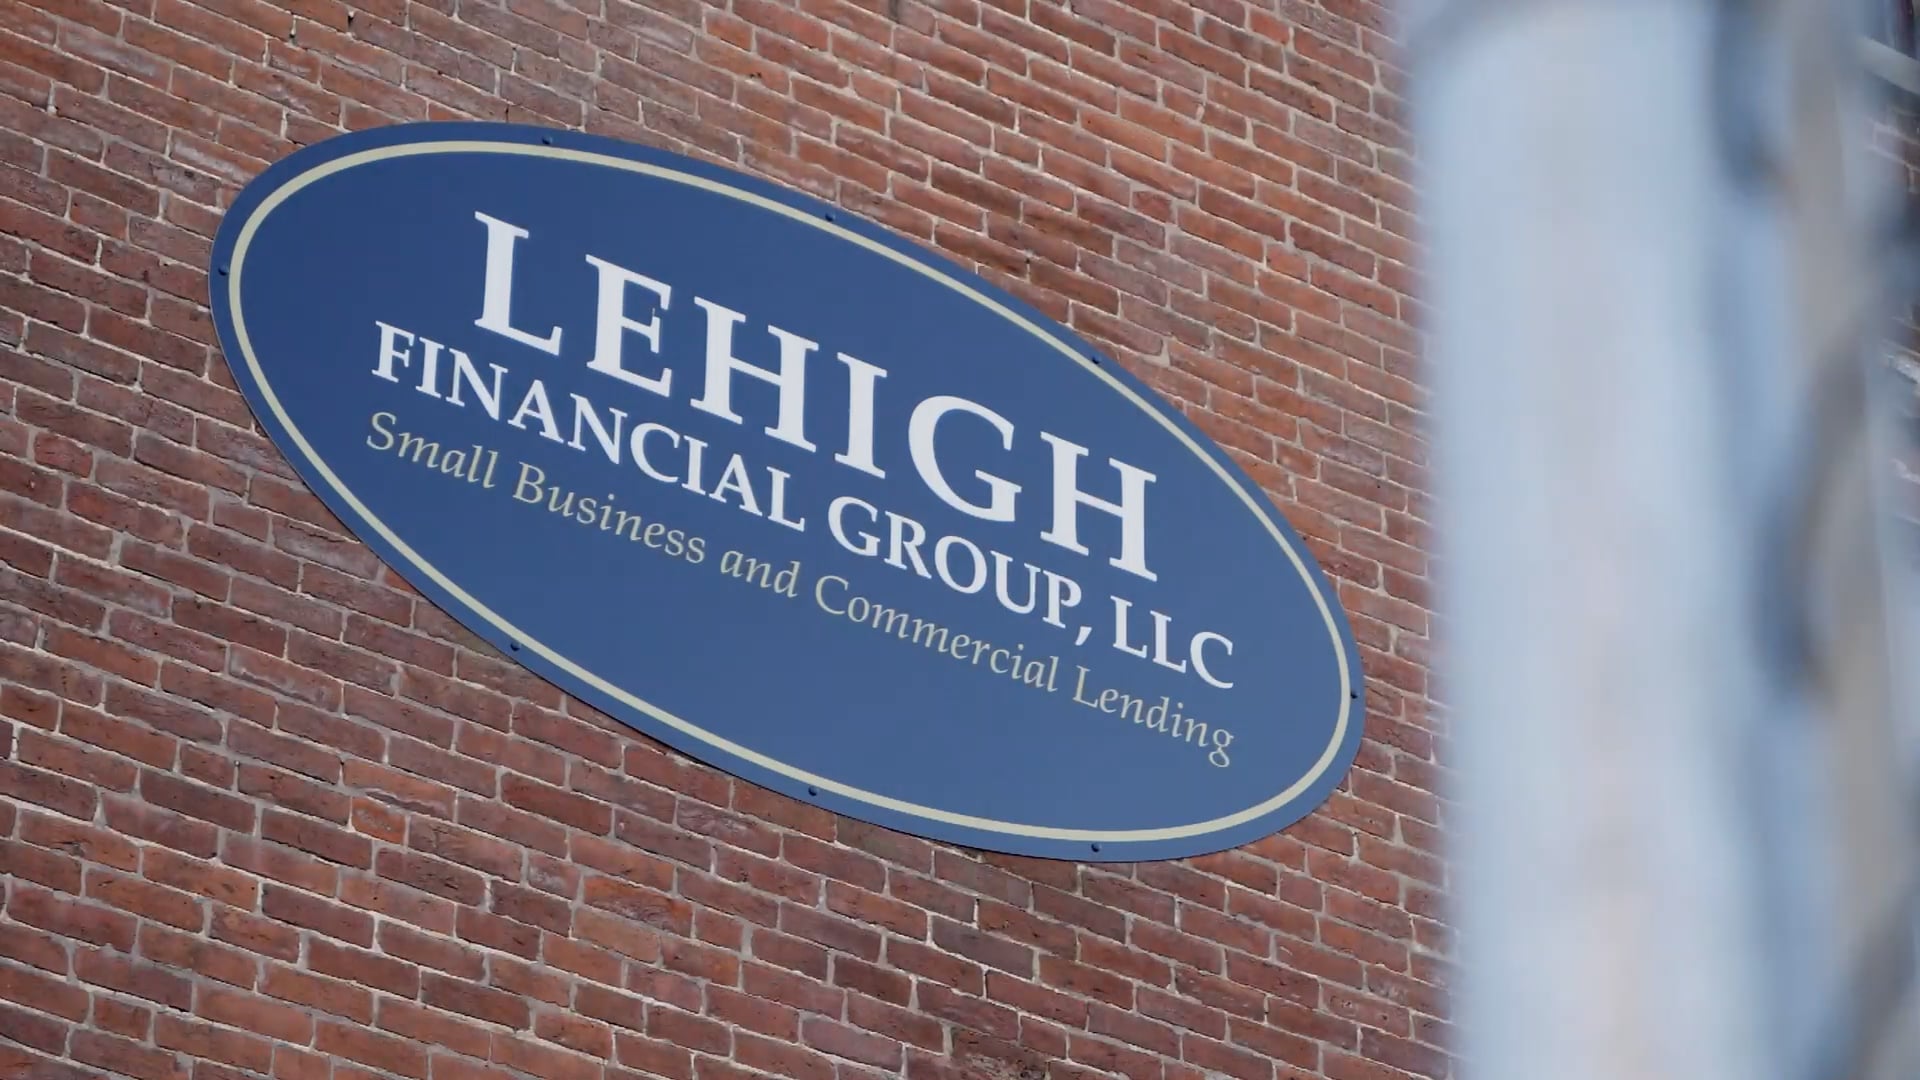 Lehigh Financial Group